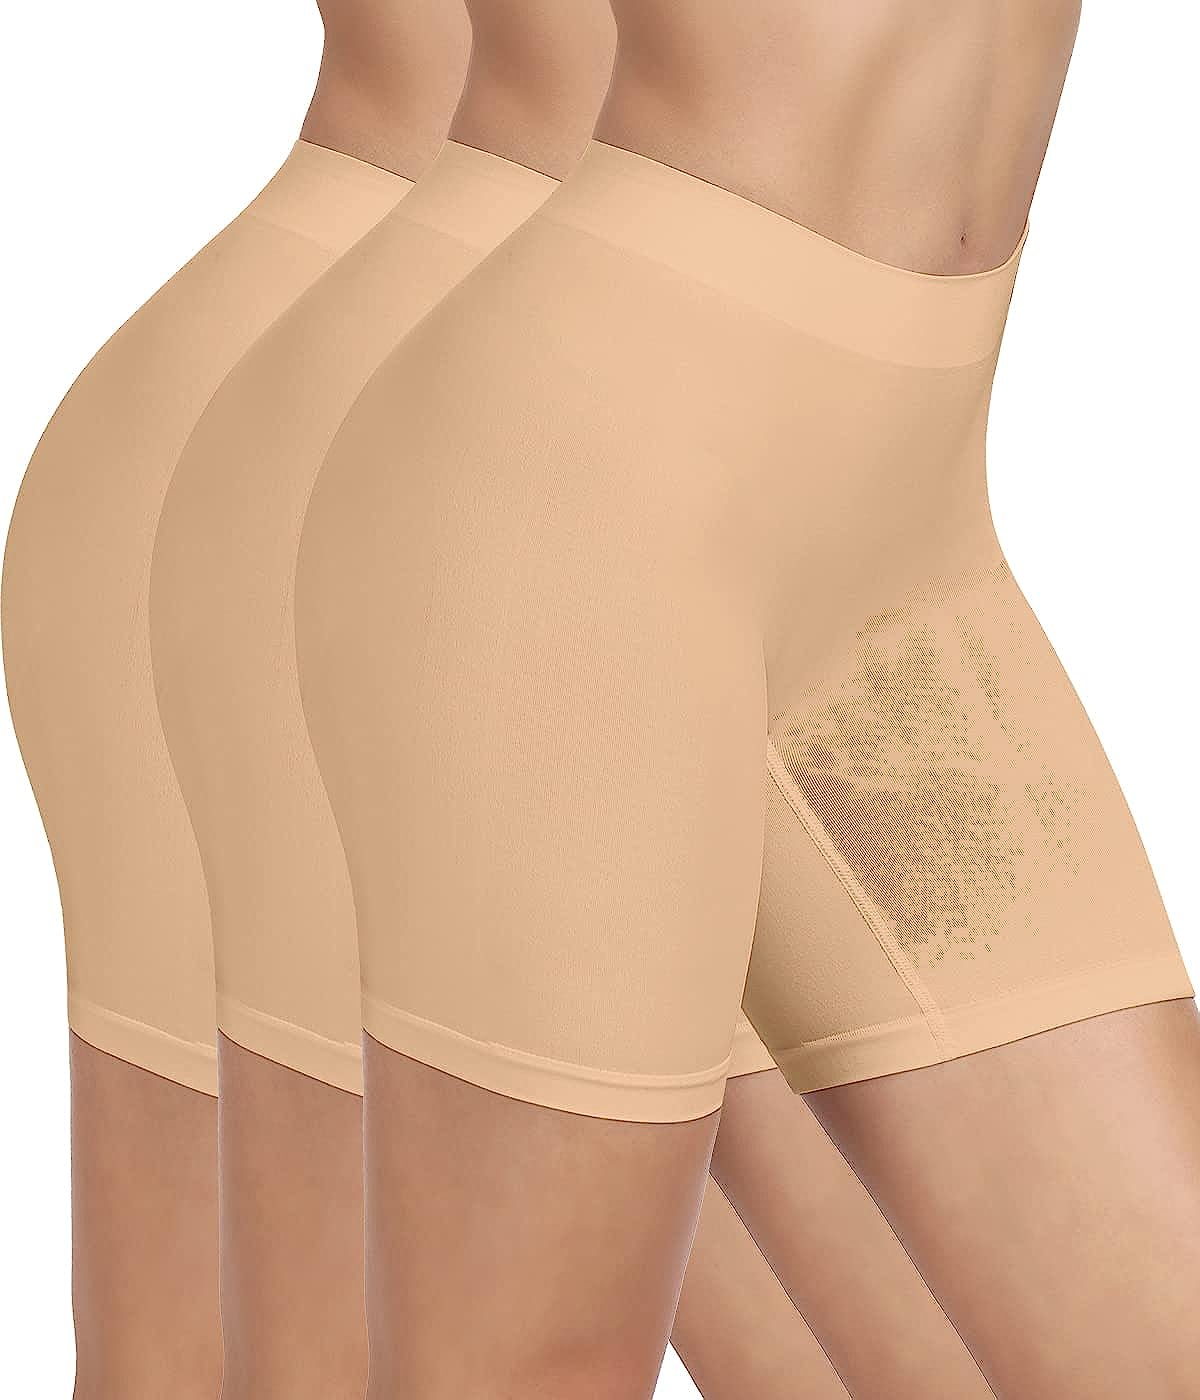 BESTENA Slip Shorts Womens Comfortable Seamless Smooth Slip Shorts